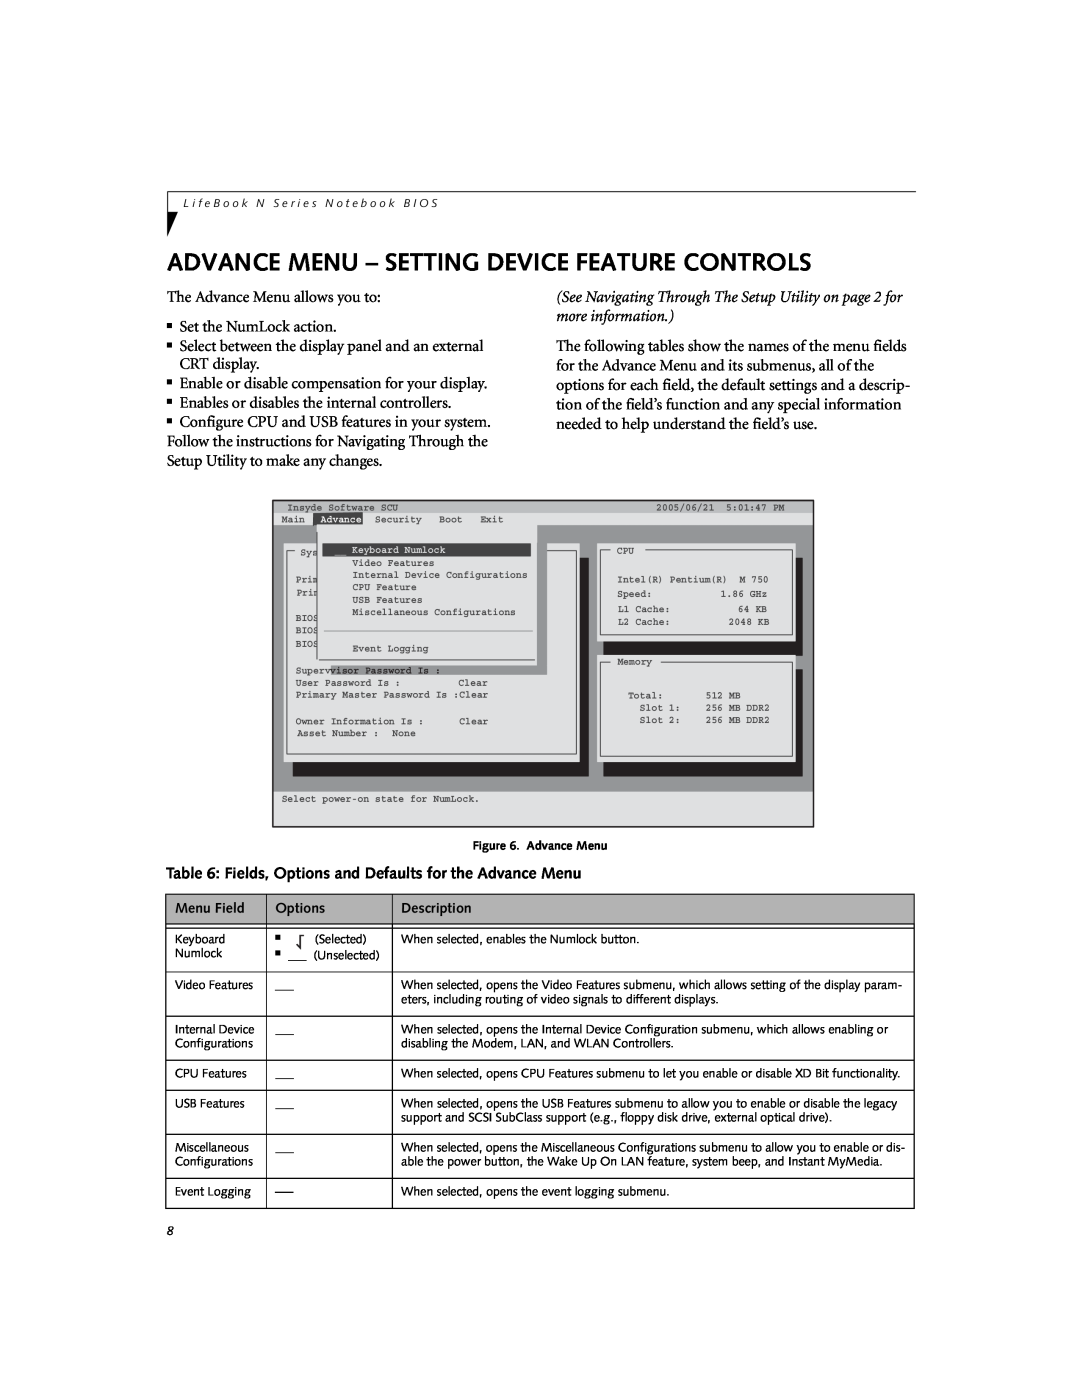 Fujitsu Siemens Computers N6210 manual Advance Menu - Setting Device Feature Controls, Menu Field, Options, Description 